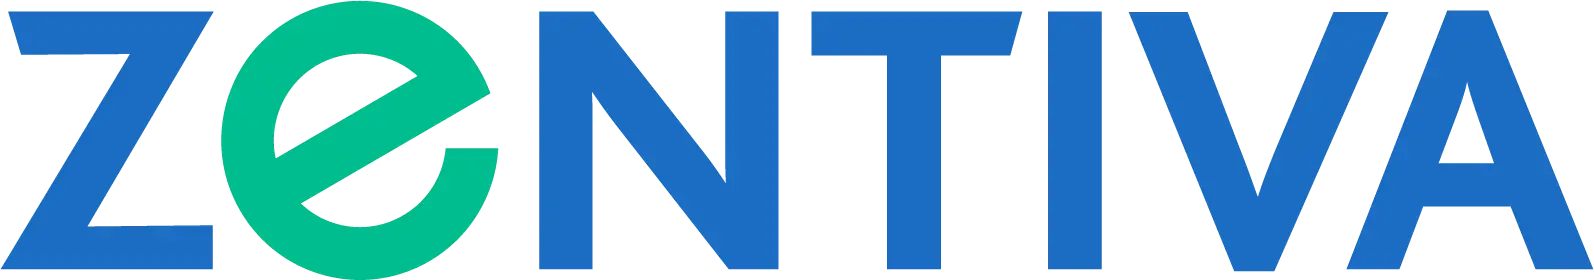 zentiva logo.png